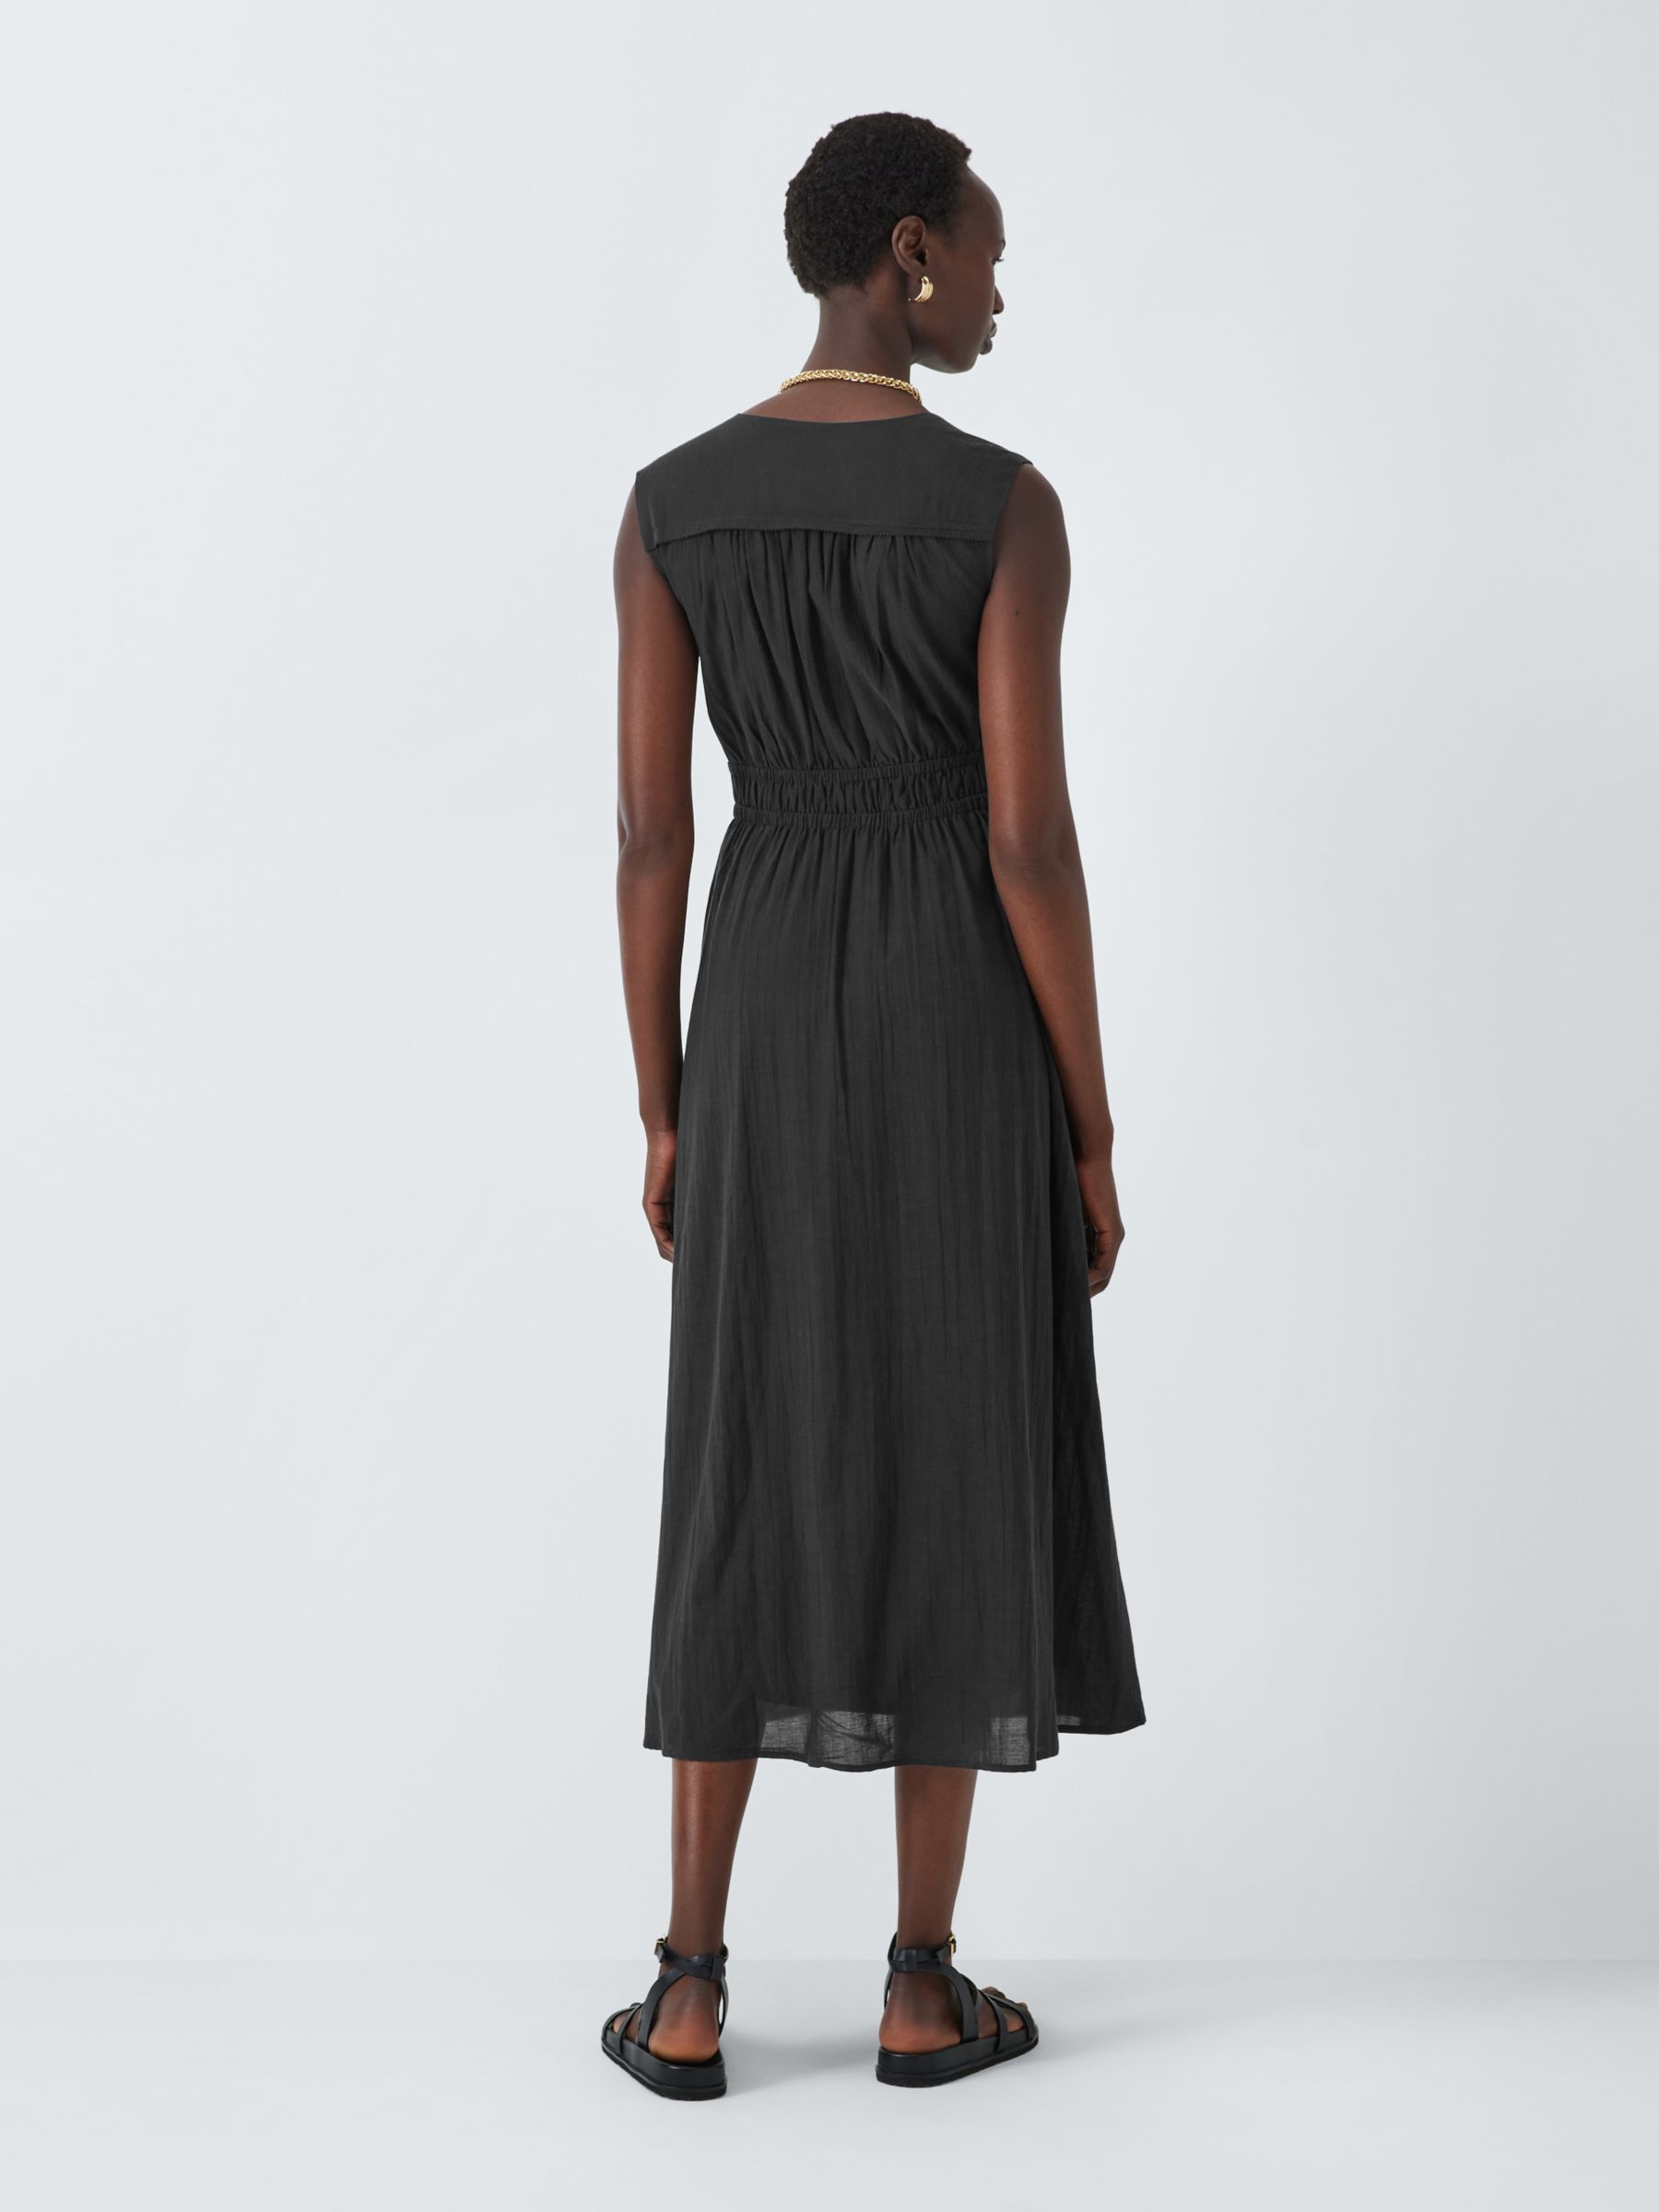 John Lewis Crinkle Cotton Blend Sleeveless Dress, Black, 8